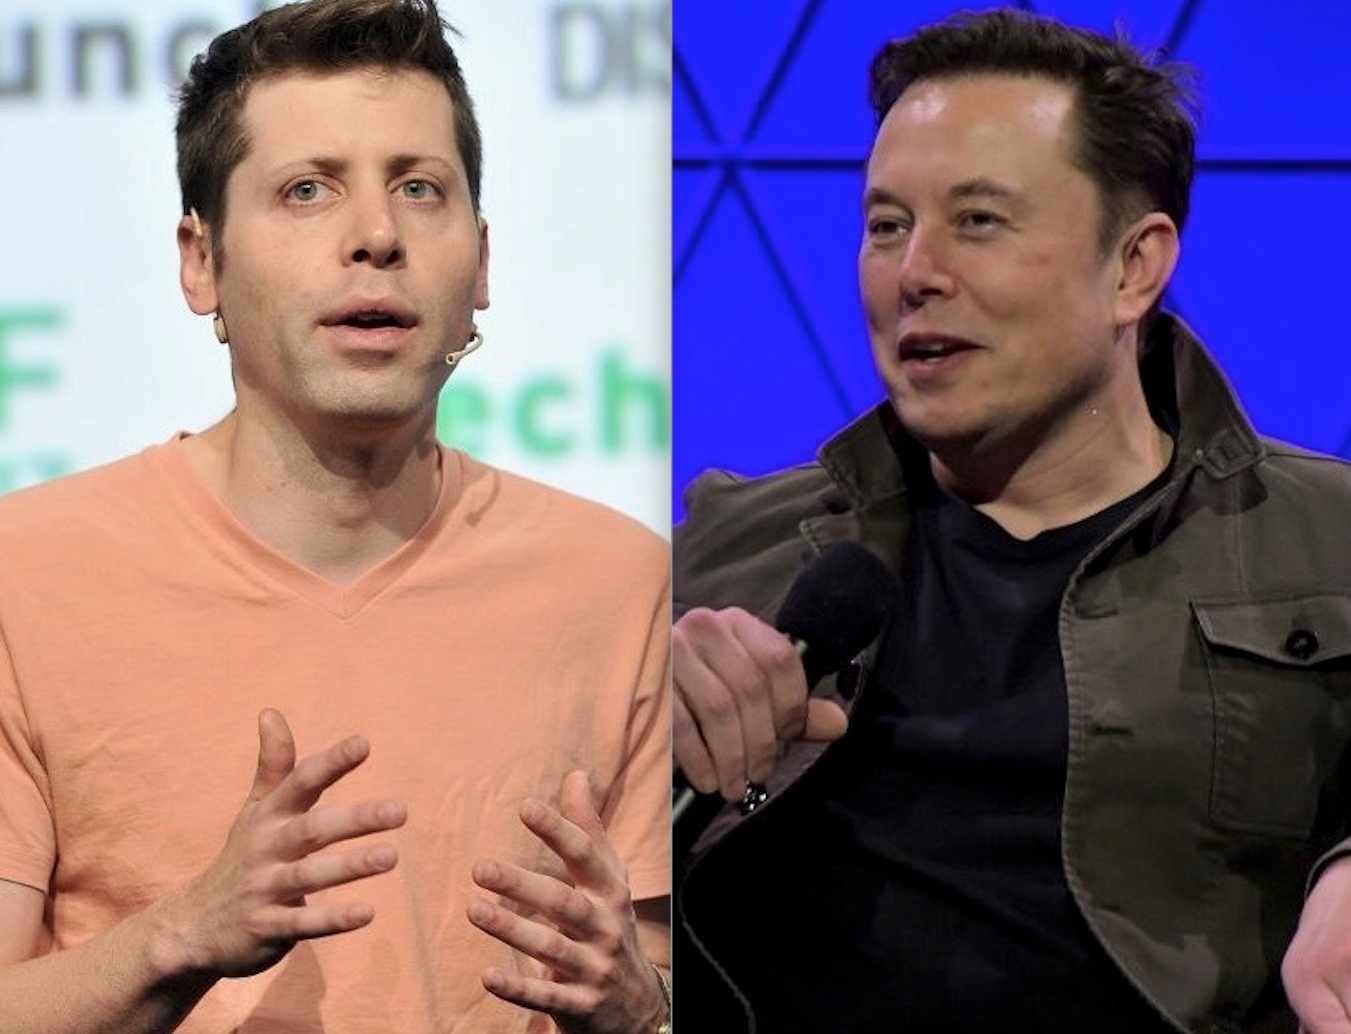 OpenAI CEO Sam Altman and Elon Musk